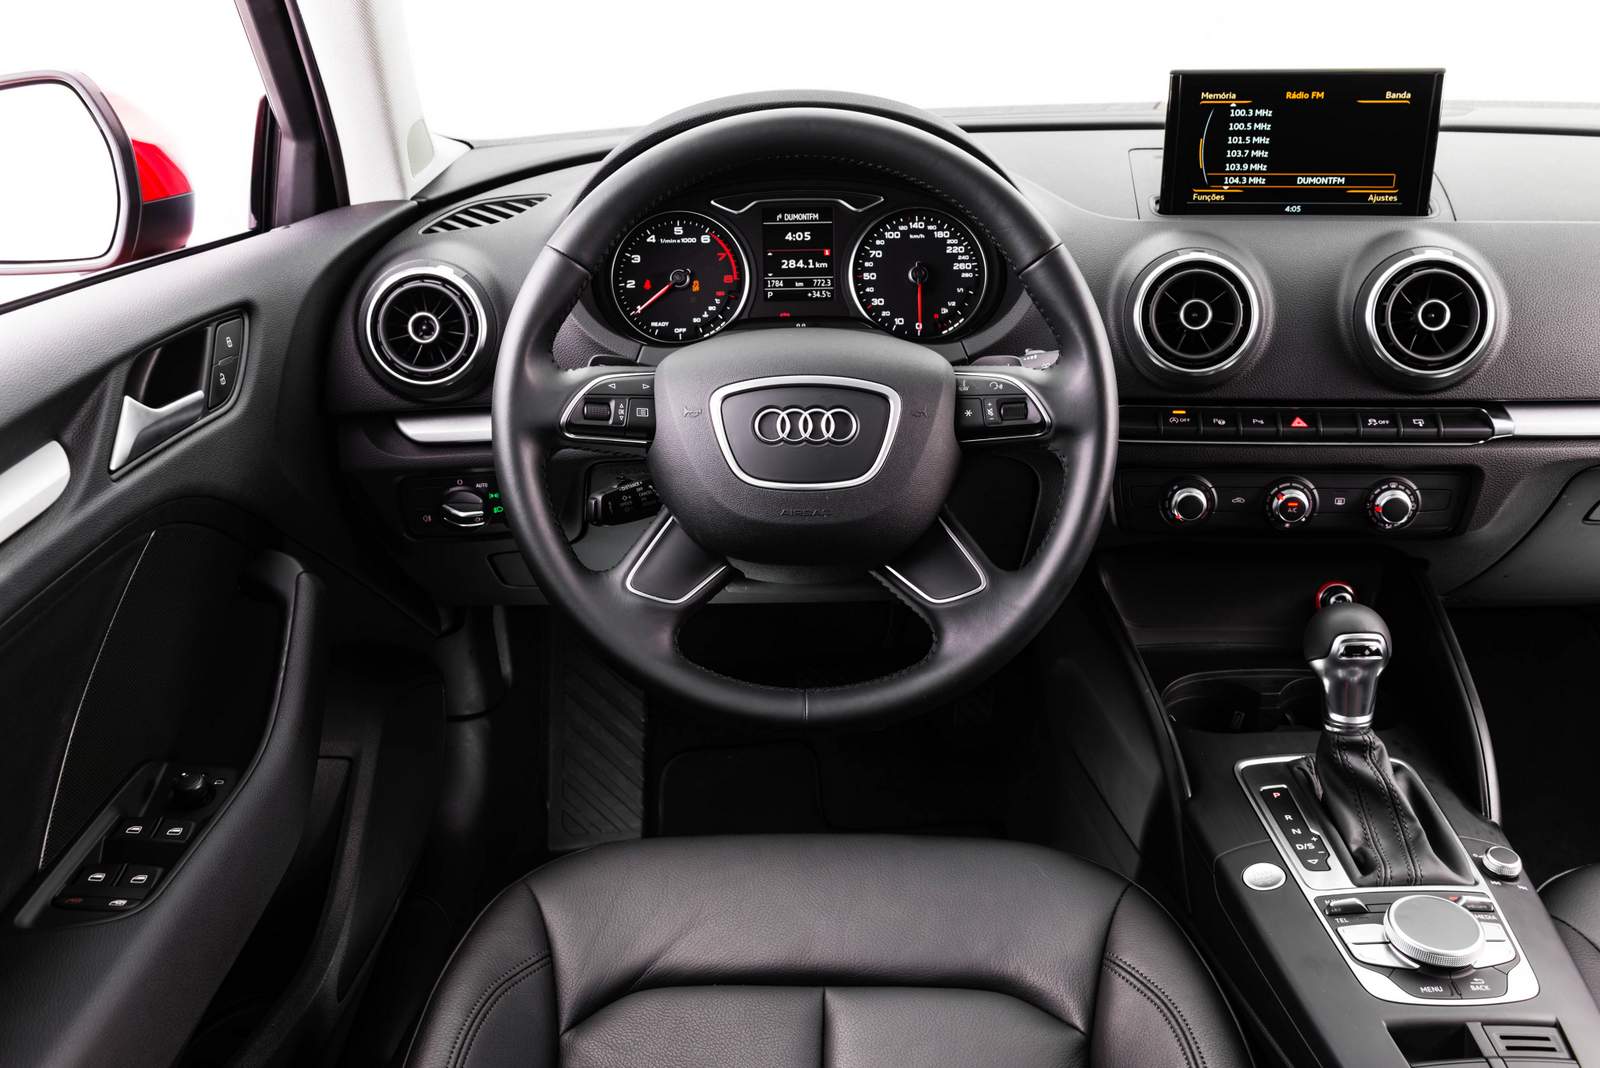 Audi A3: interior caprichado